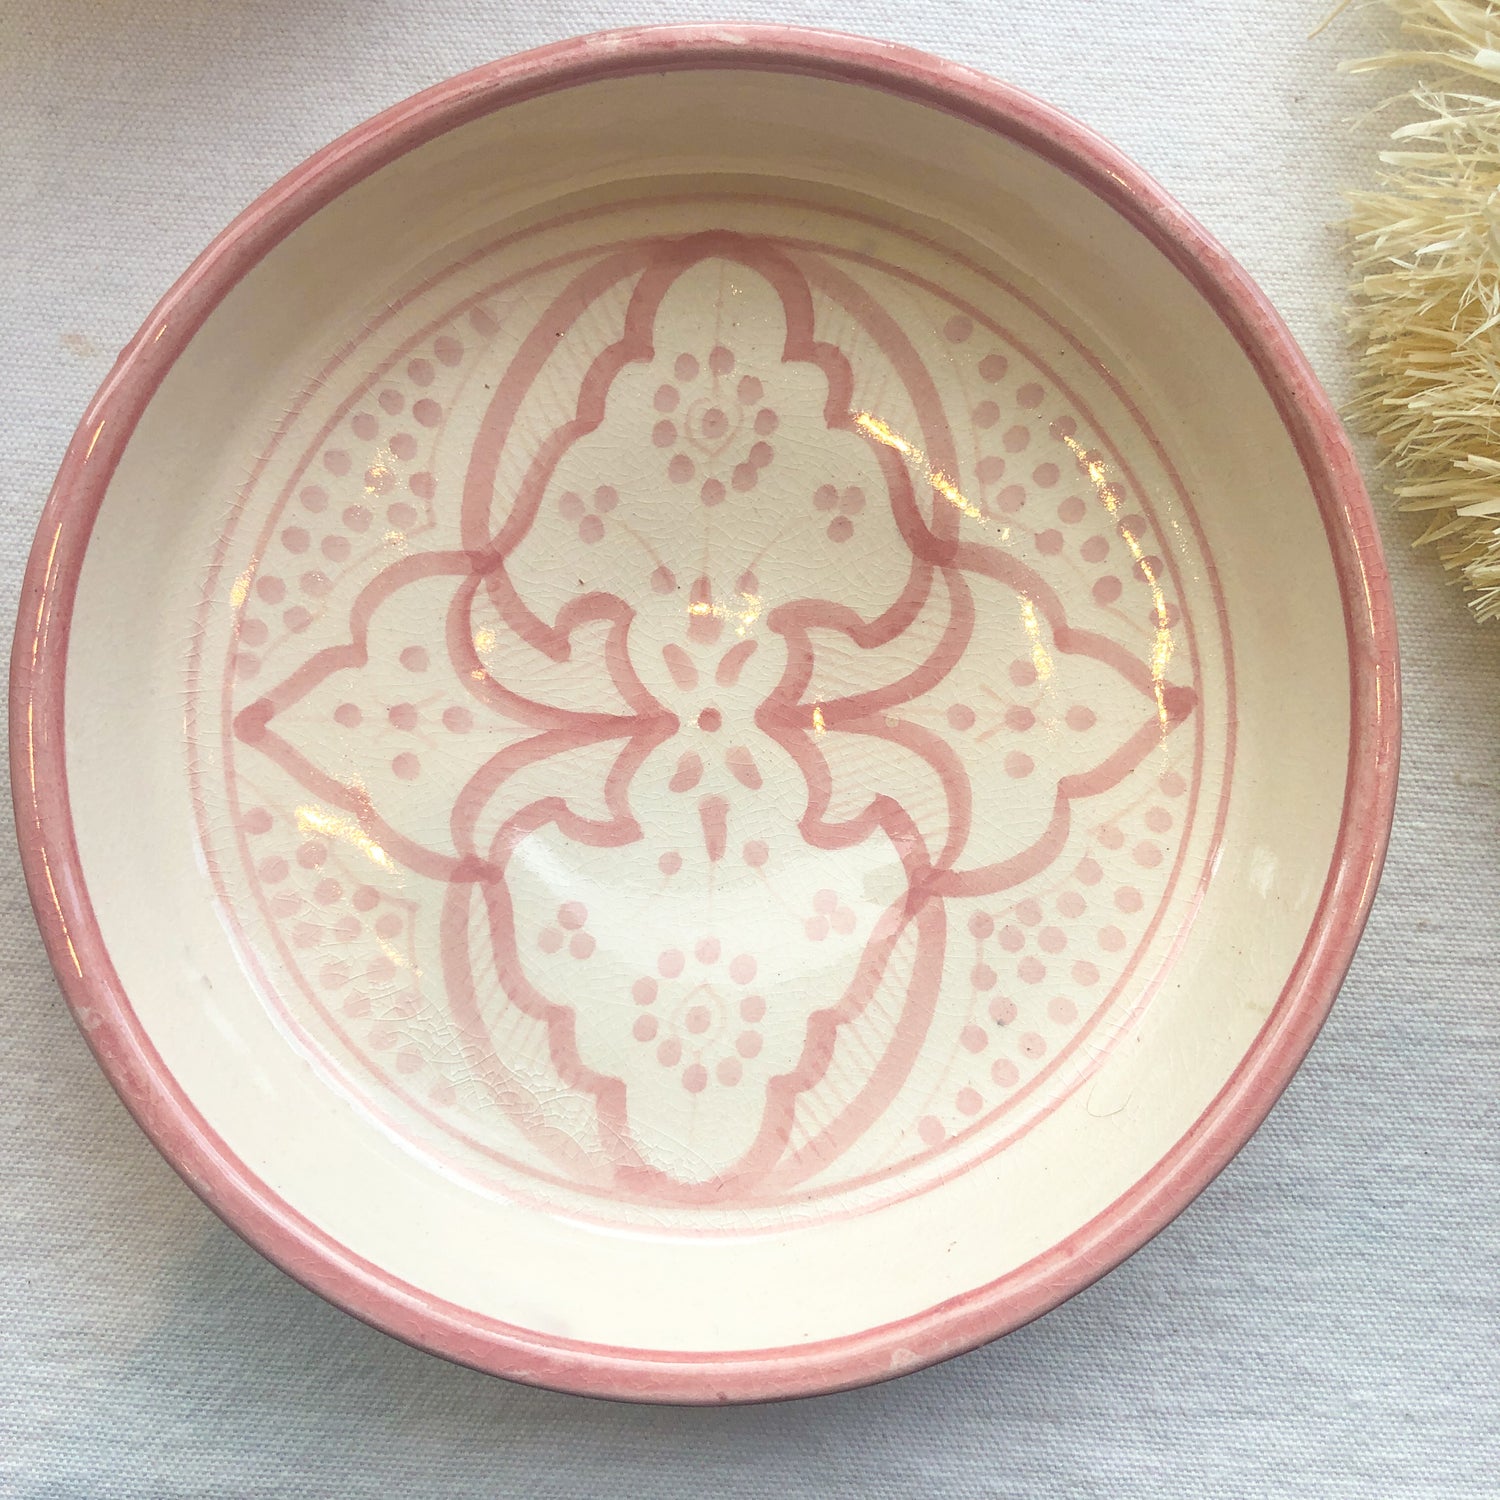 Moroccan "Zwak" Tapas Plate in Blush Pink & White